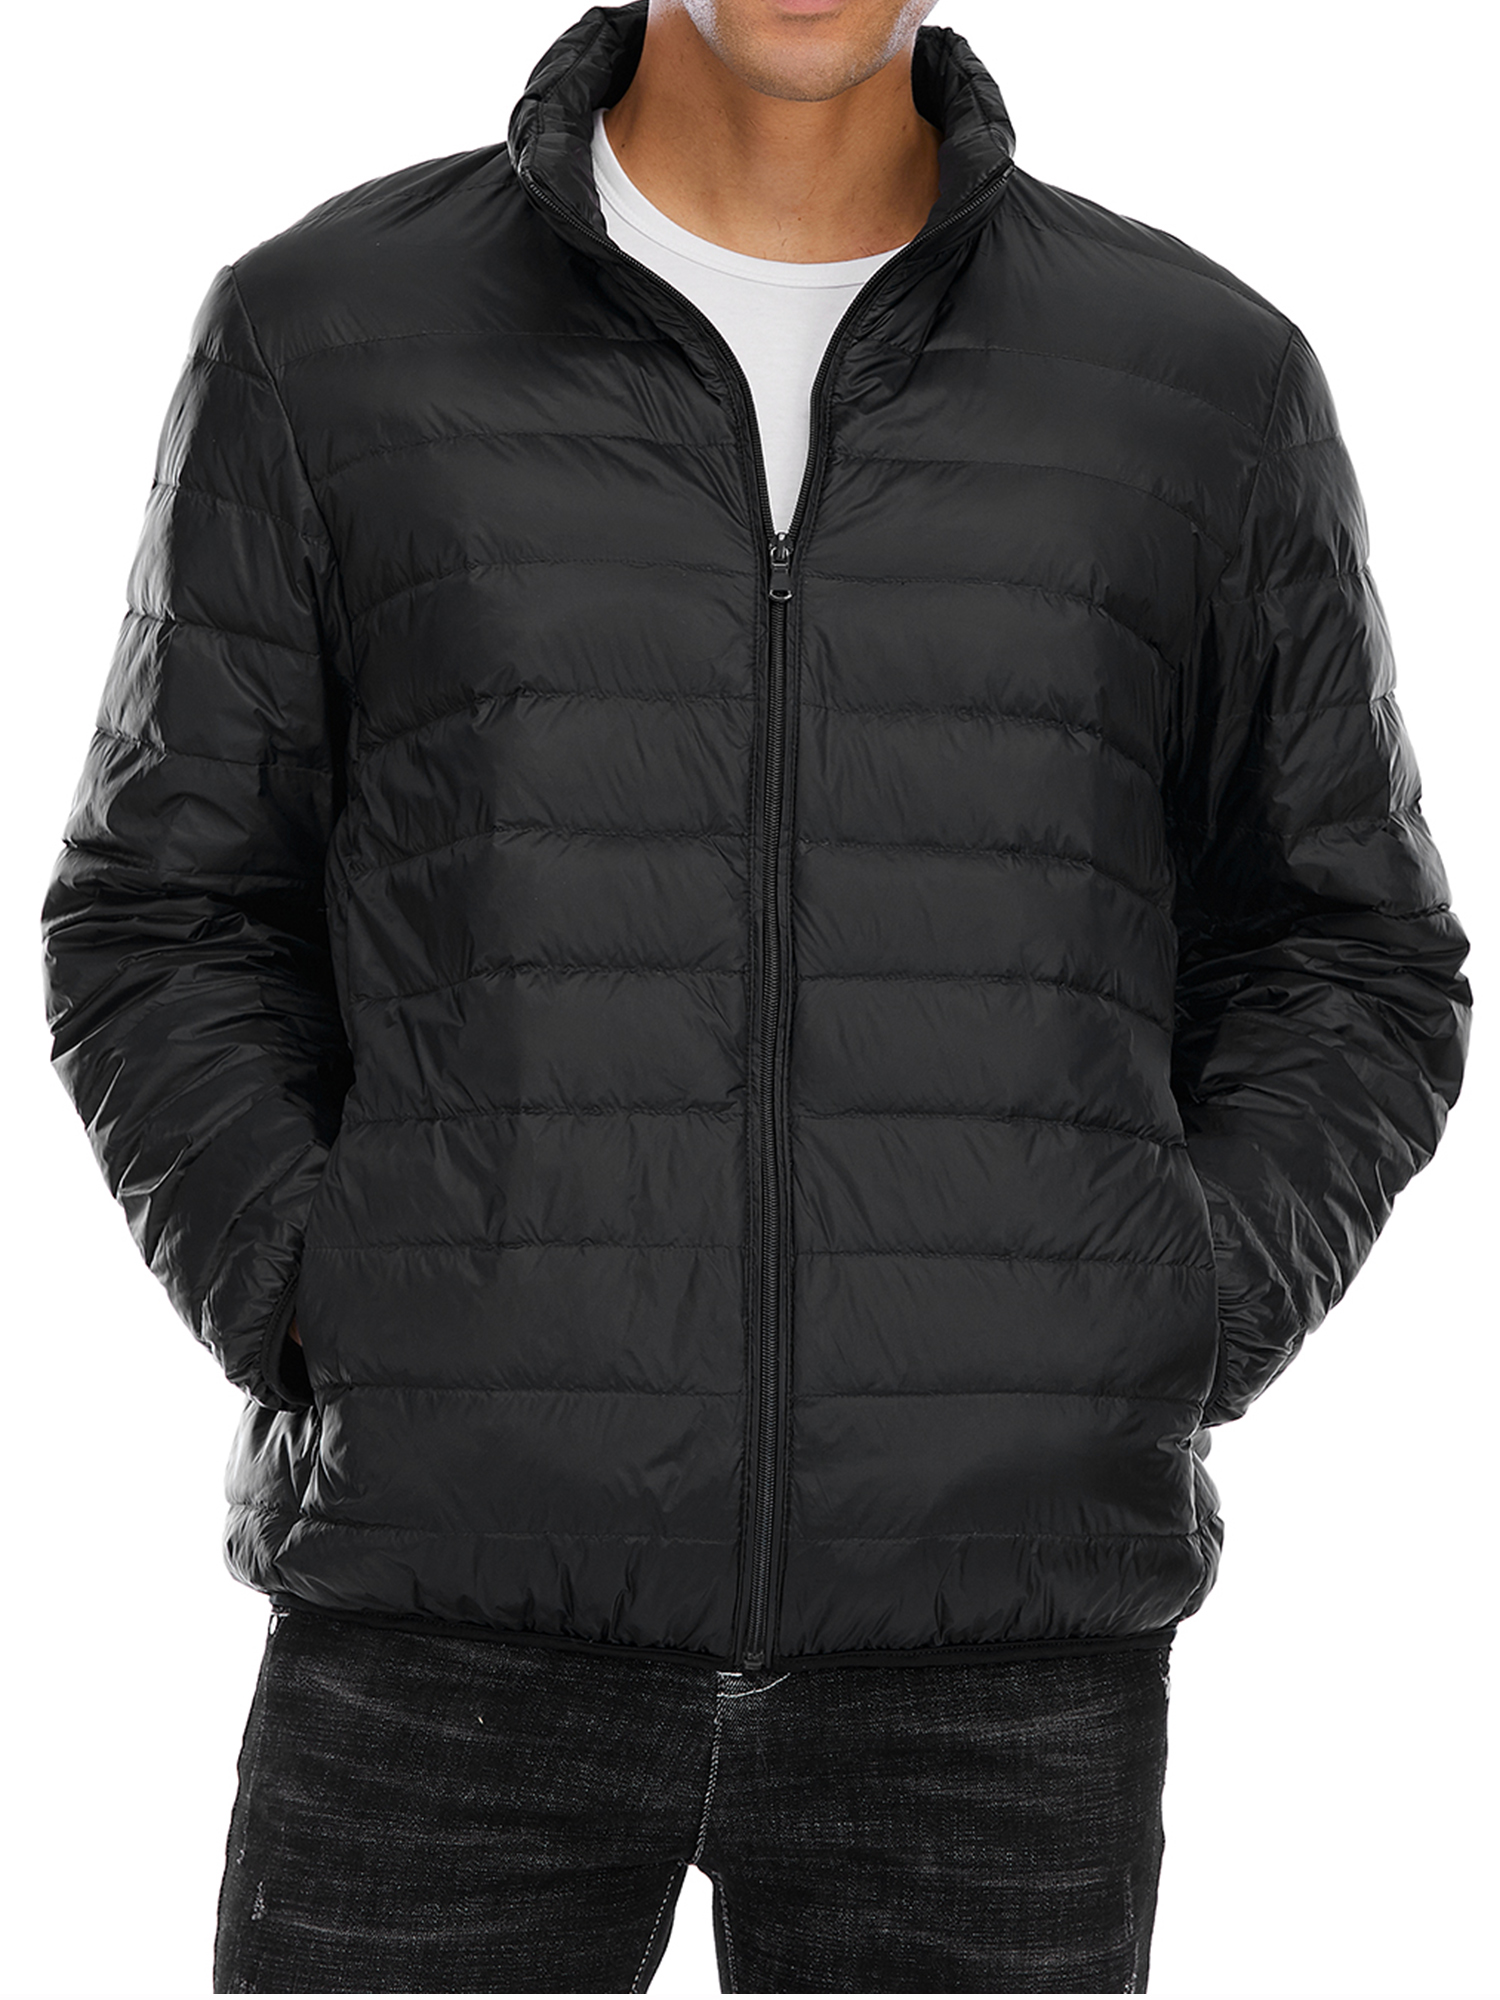 Mens Down Jacket Casual Zip Up Windbreaker Jackets Outdoor Coat Winter Jackets Lightweight Down Jacket Men Boys Puffer Coats Outwear, Size S-2XL - image 4 of 7